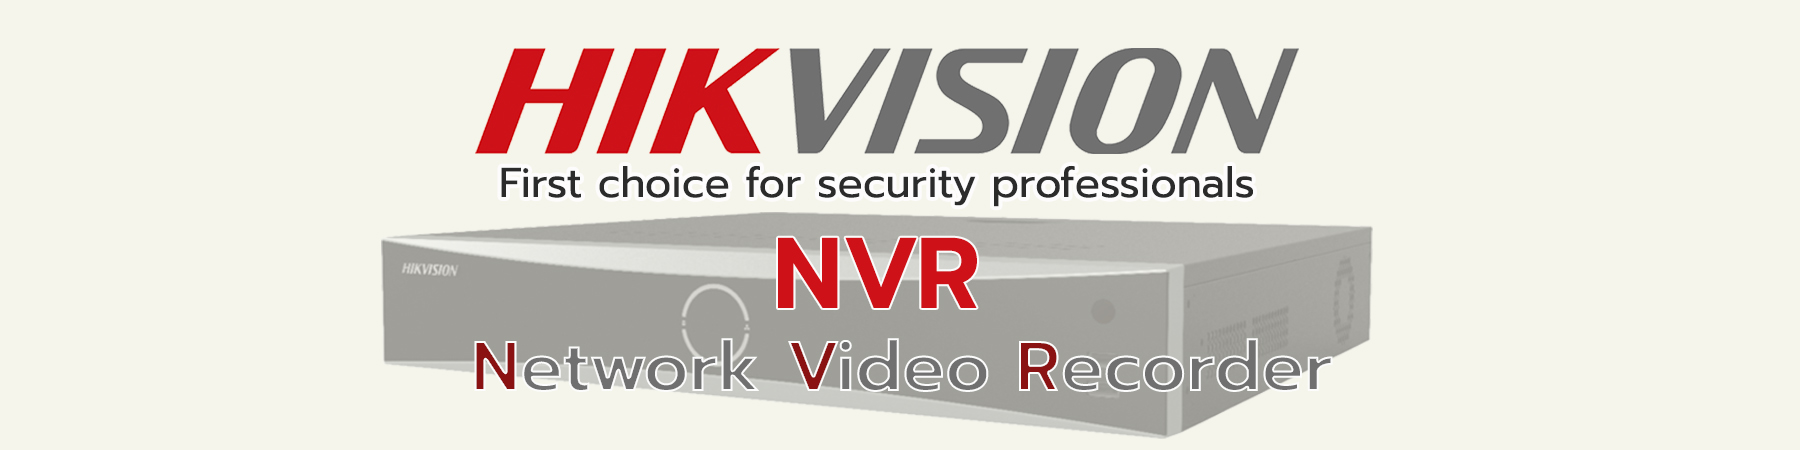 Hikvision NVR, Hikvision Acusense NVR, Hikvision Network Video Recorder, เครื่องบันทึกภาพ Hikvision, DS-7100 Series, DS-7600 Series, DS-7700 Series, DS-9600 Series